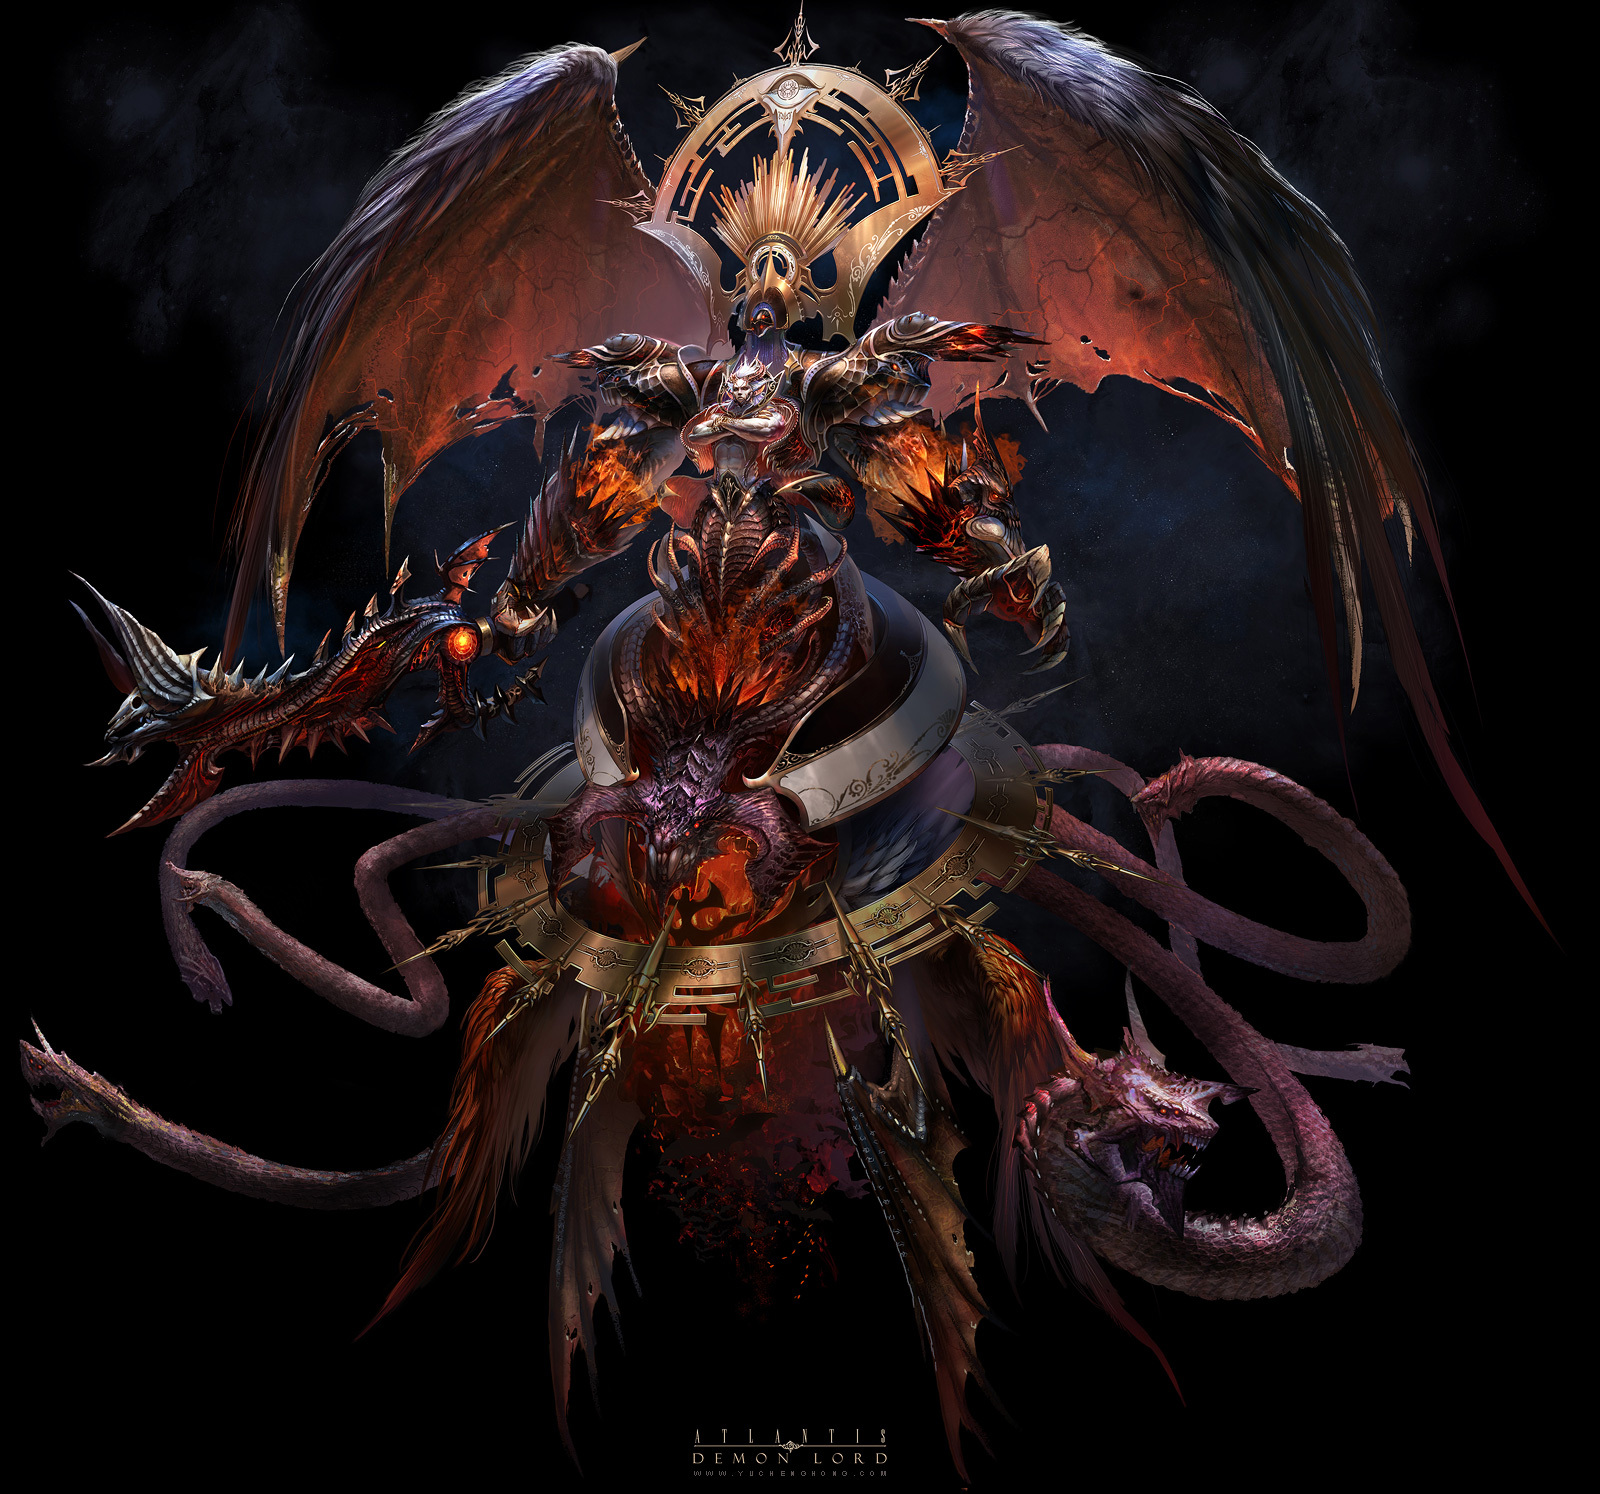 ArtStation - Demon Lord, Yu Cheng Hong